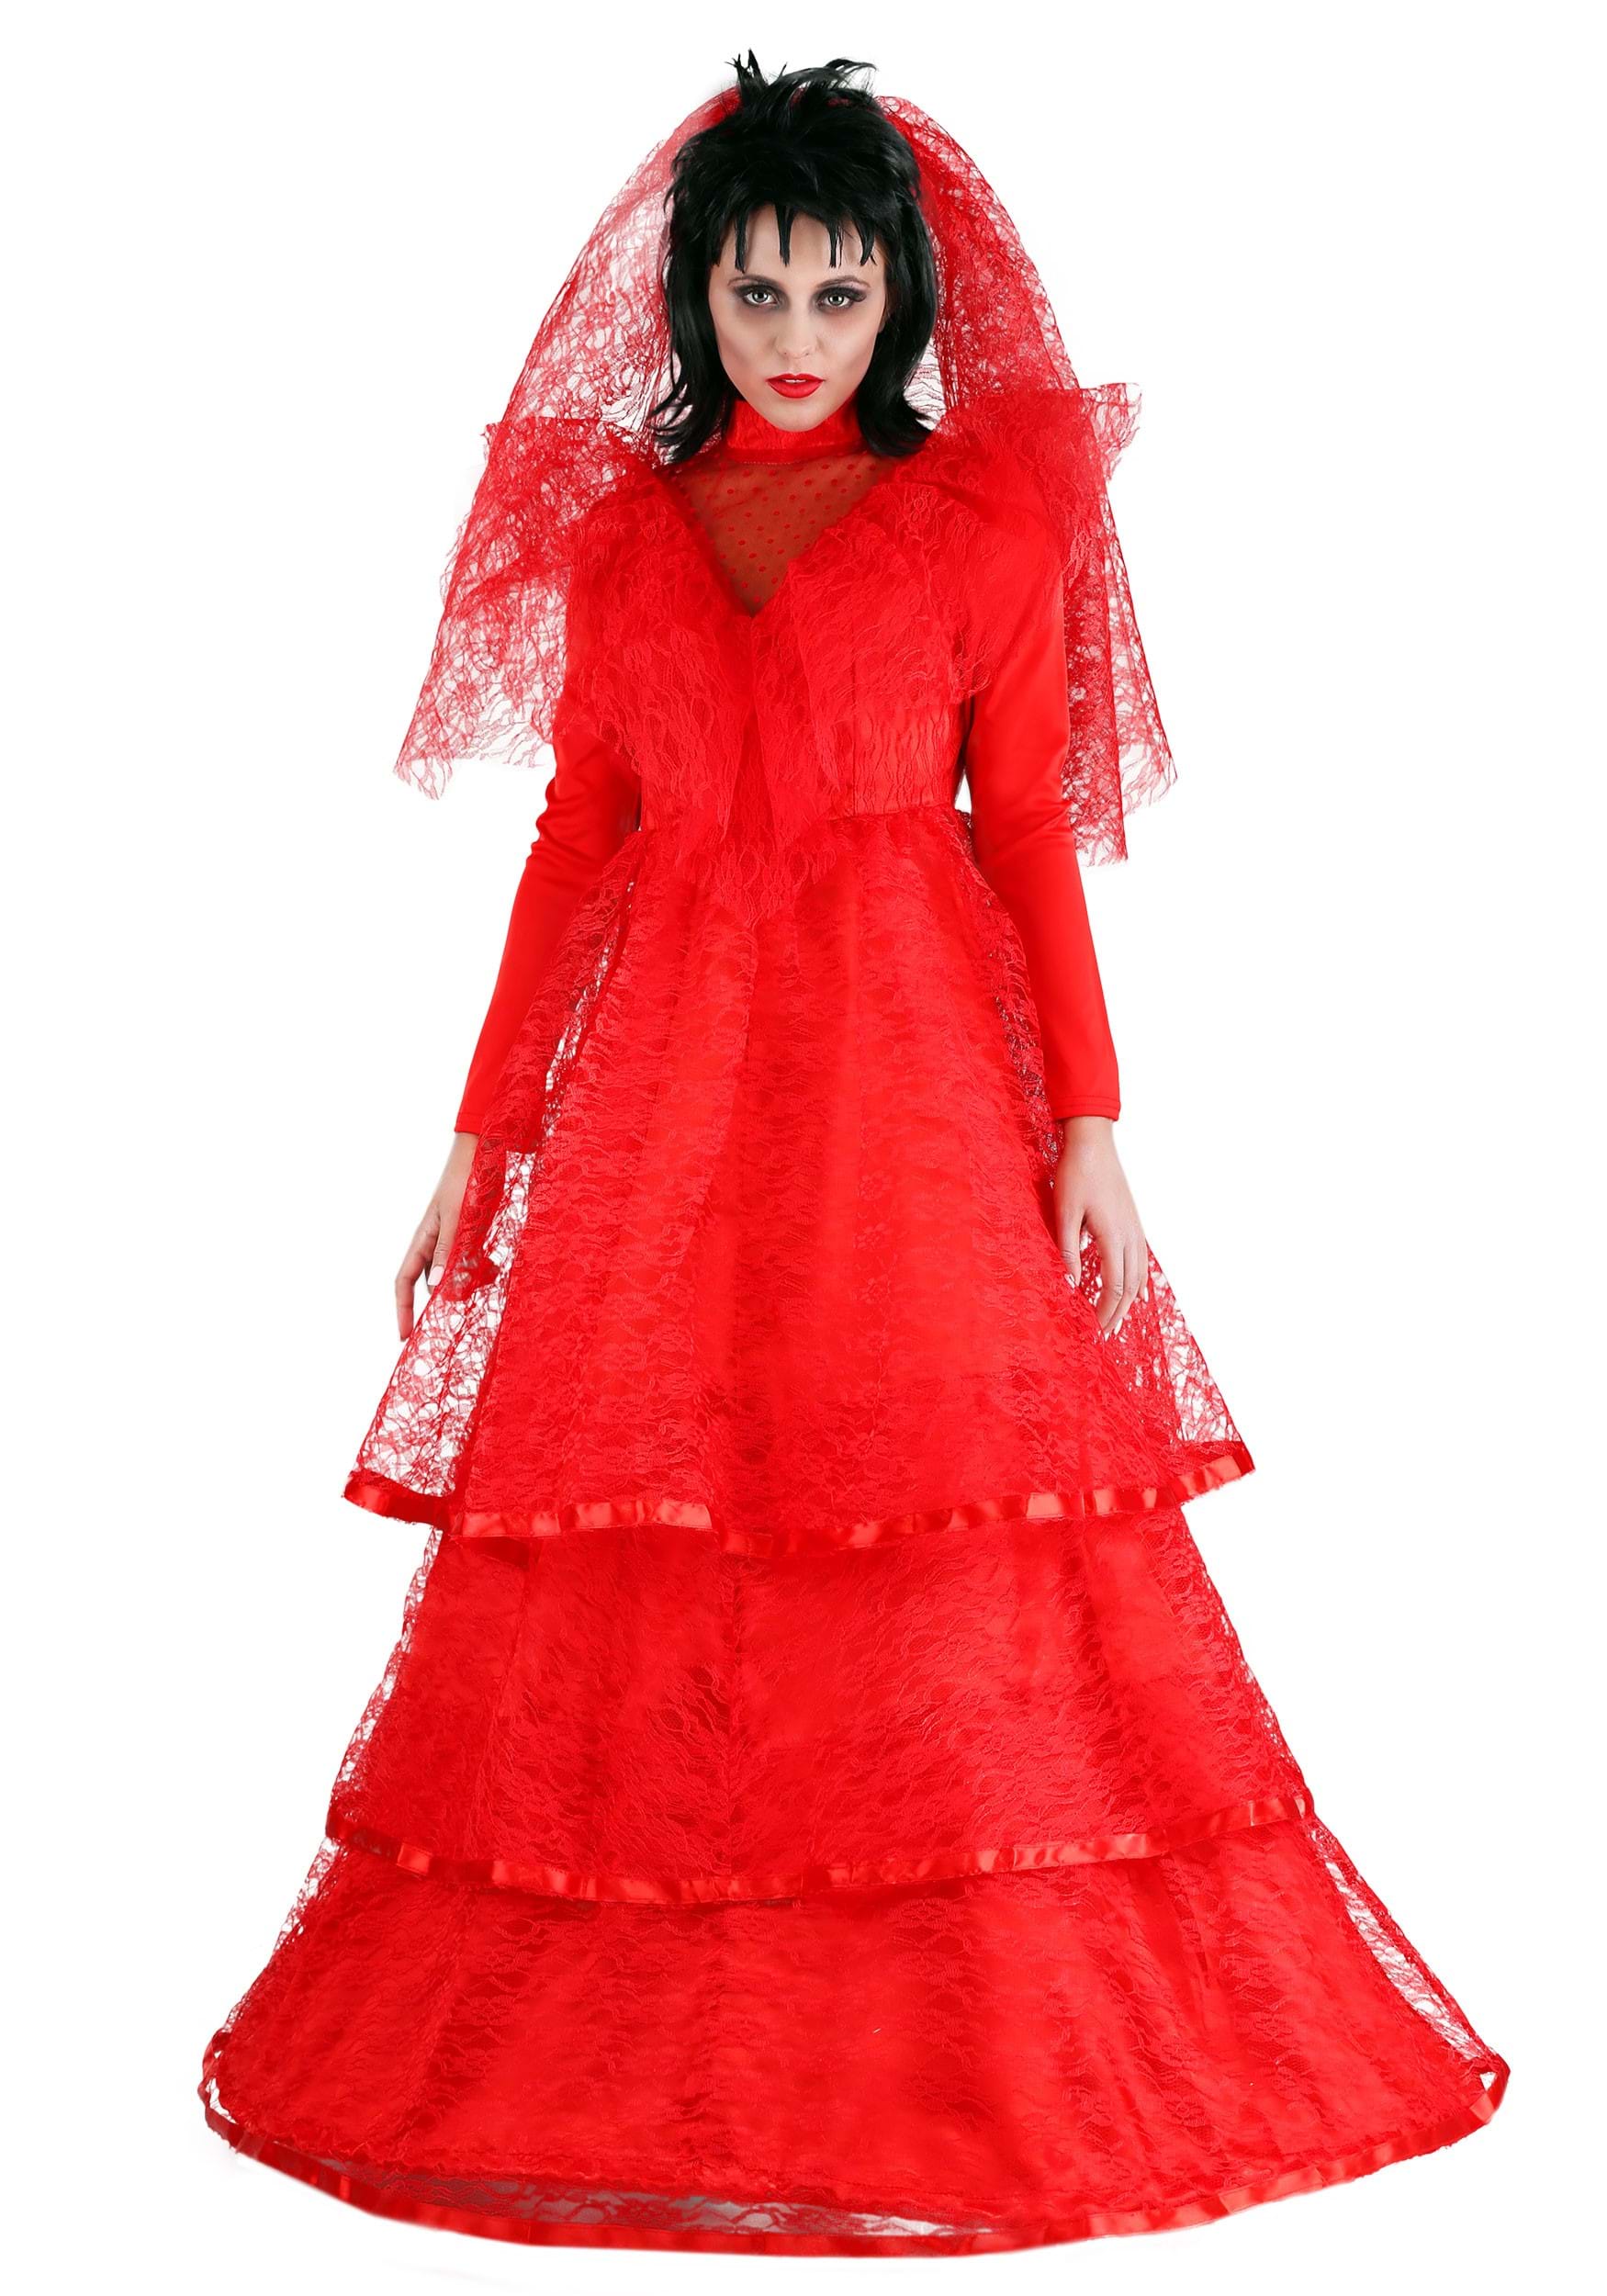 Lydia Deetz Red Wedding Dress Beetlejuice Wedding 57 Off